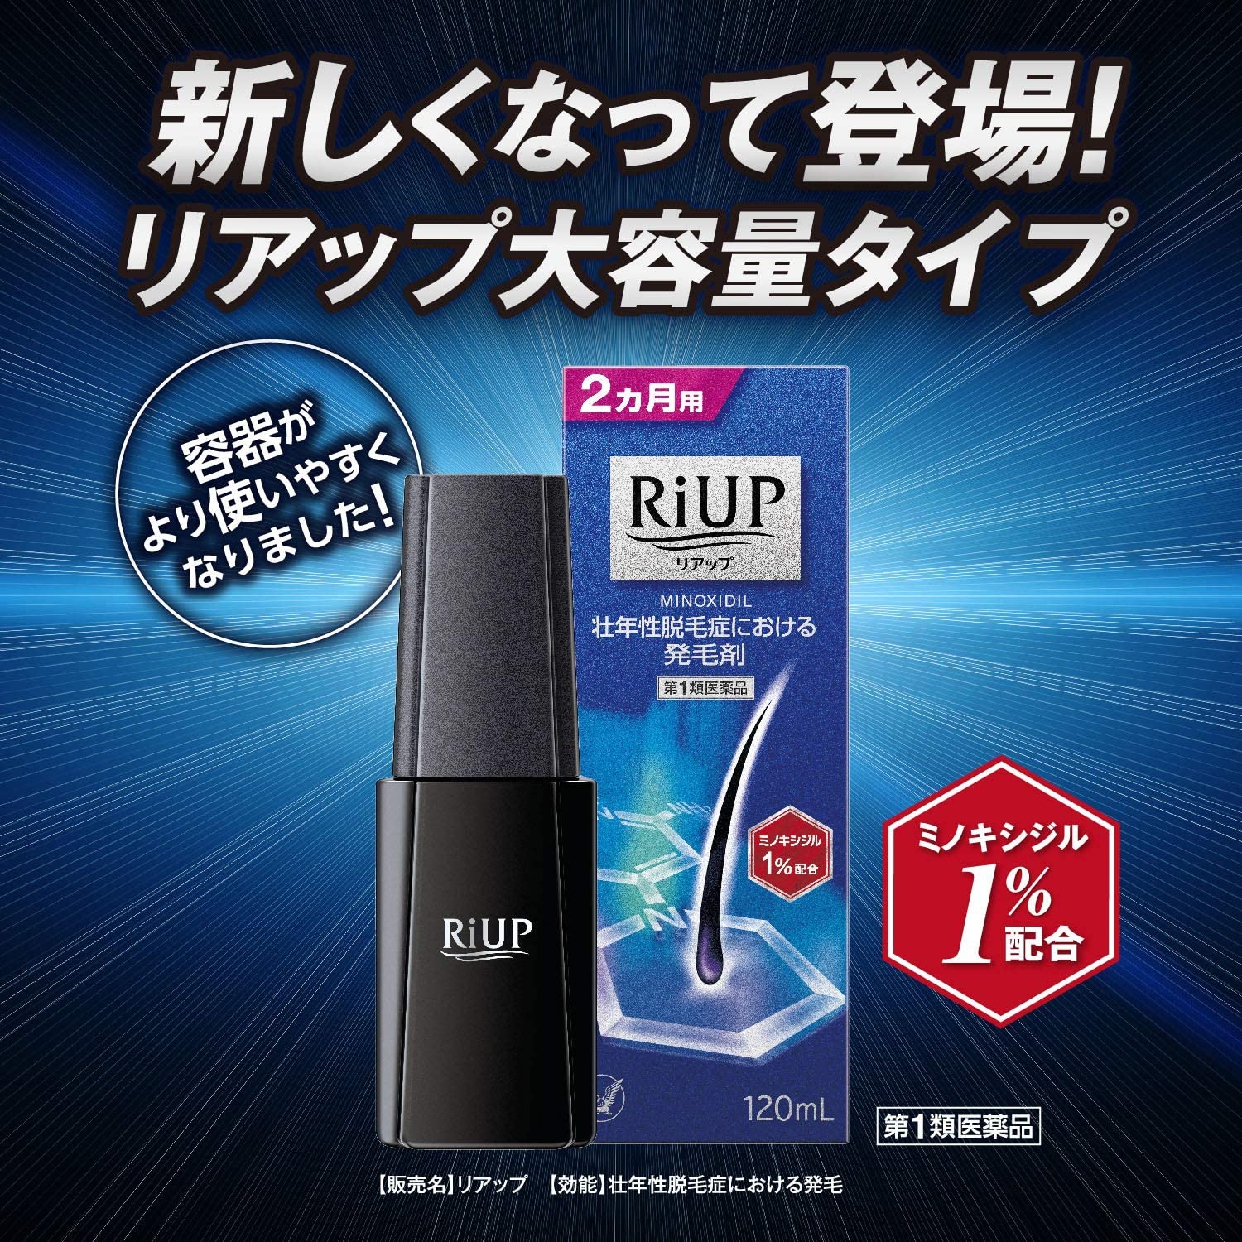 RiUP(リアップ) リアップの商品画像サムネ2 